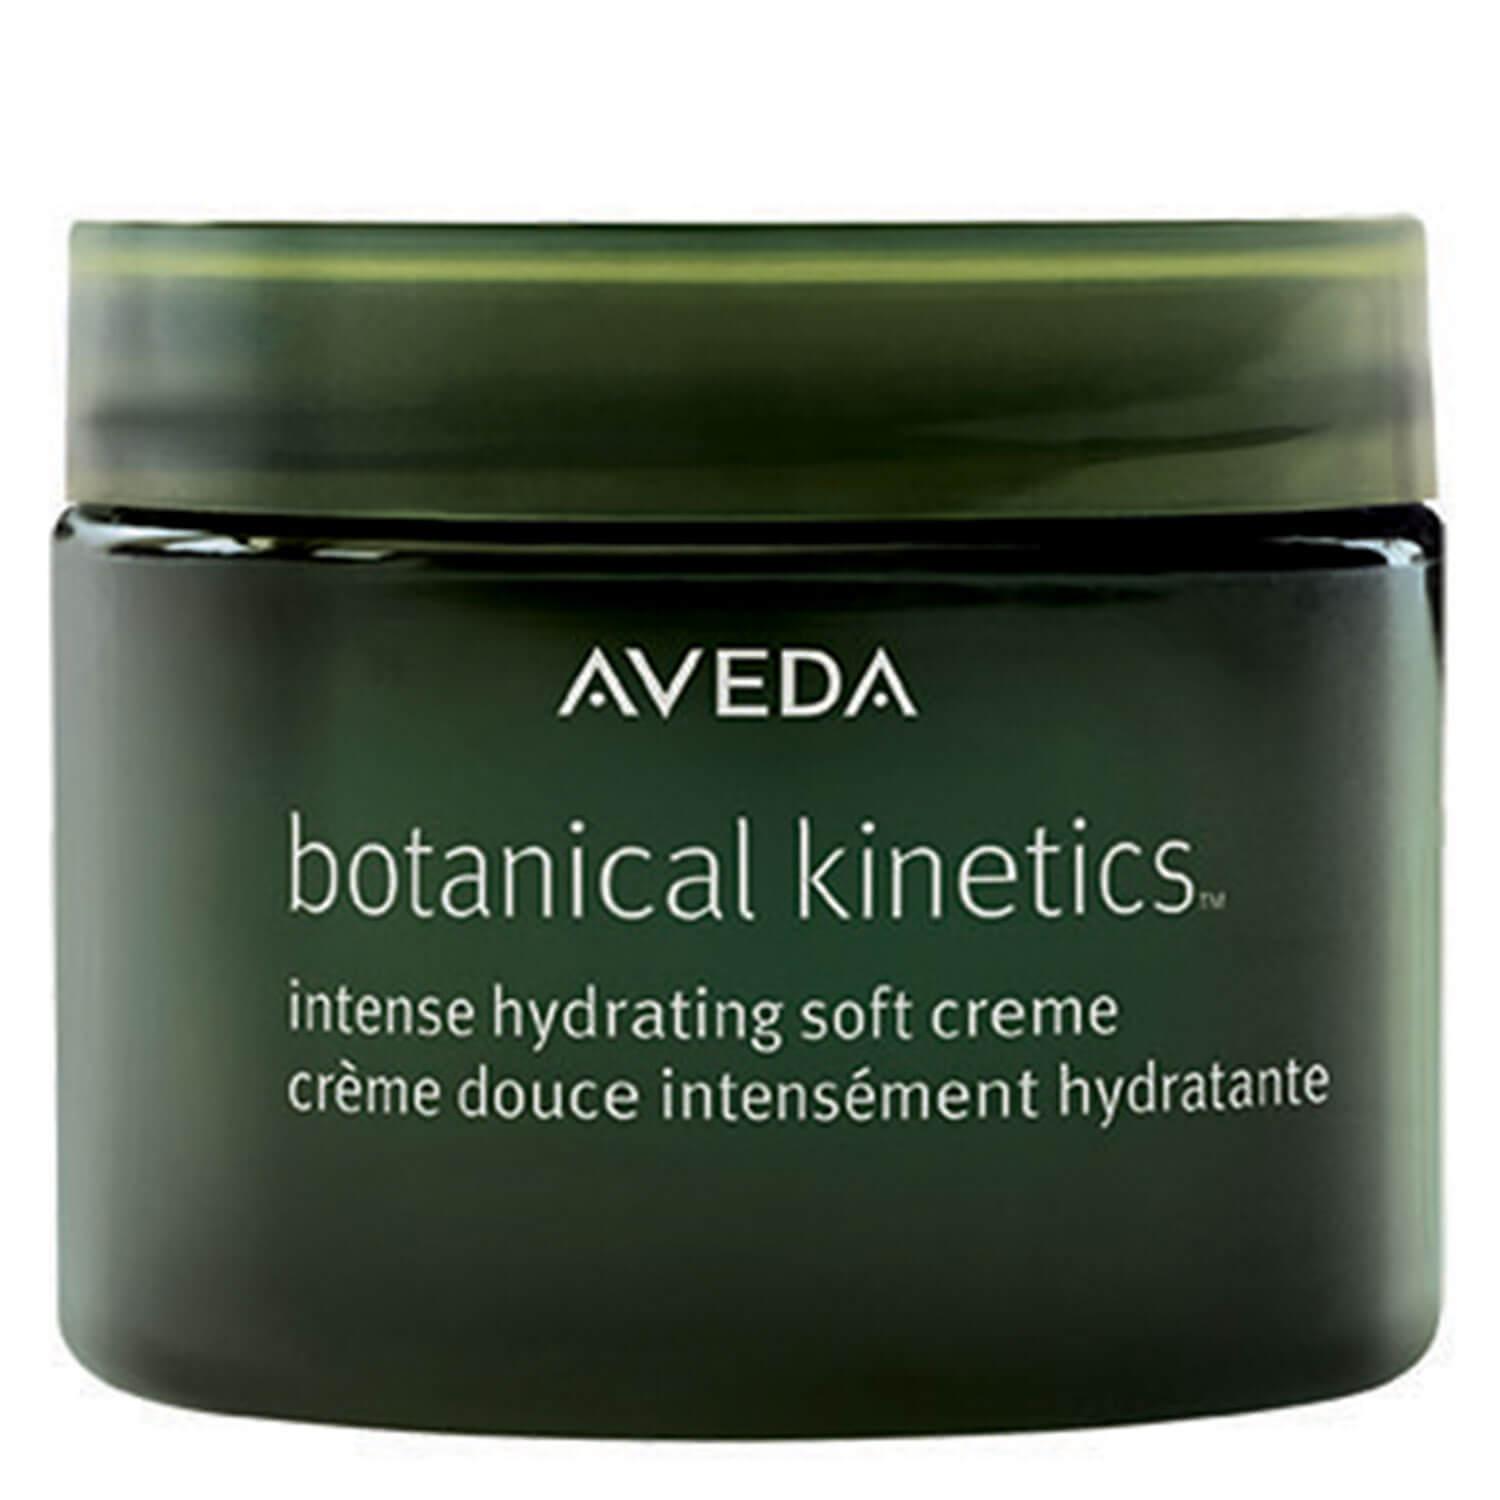 botanical kinetics - intense hydrating soft creme